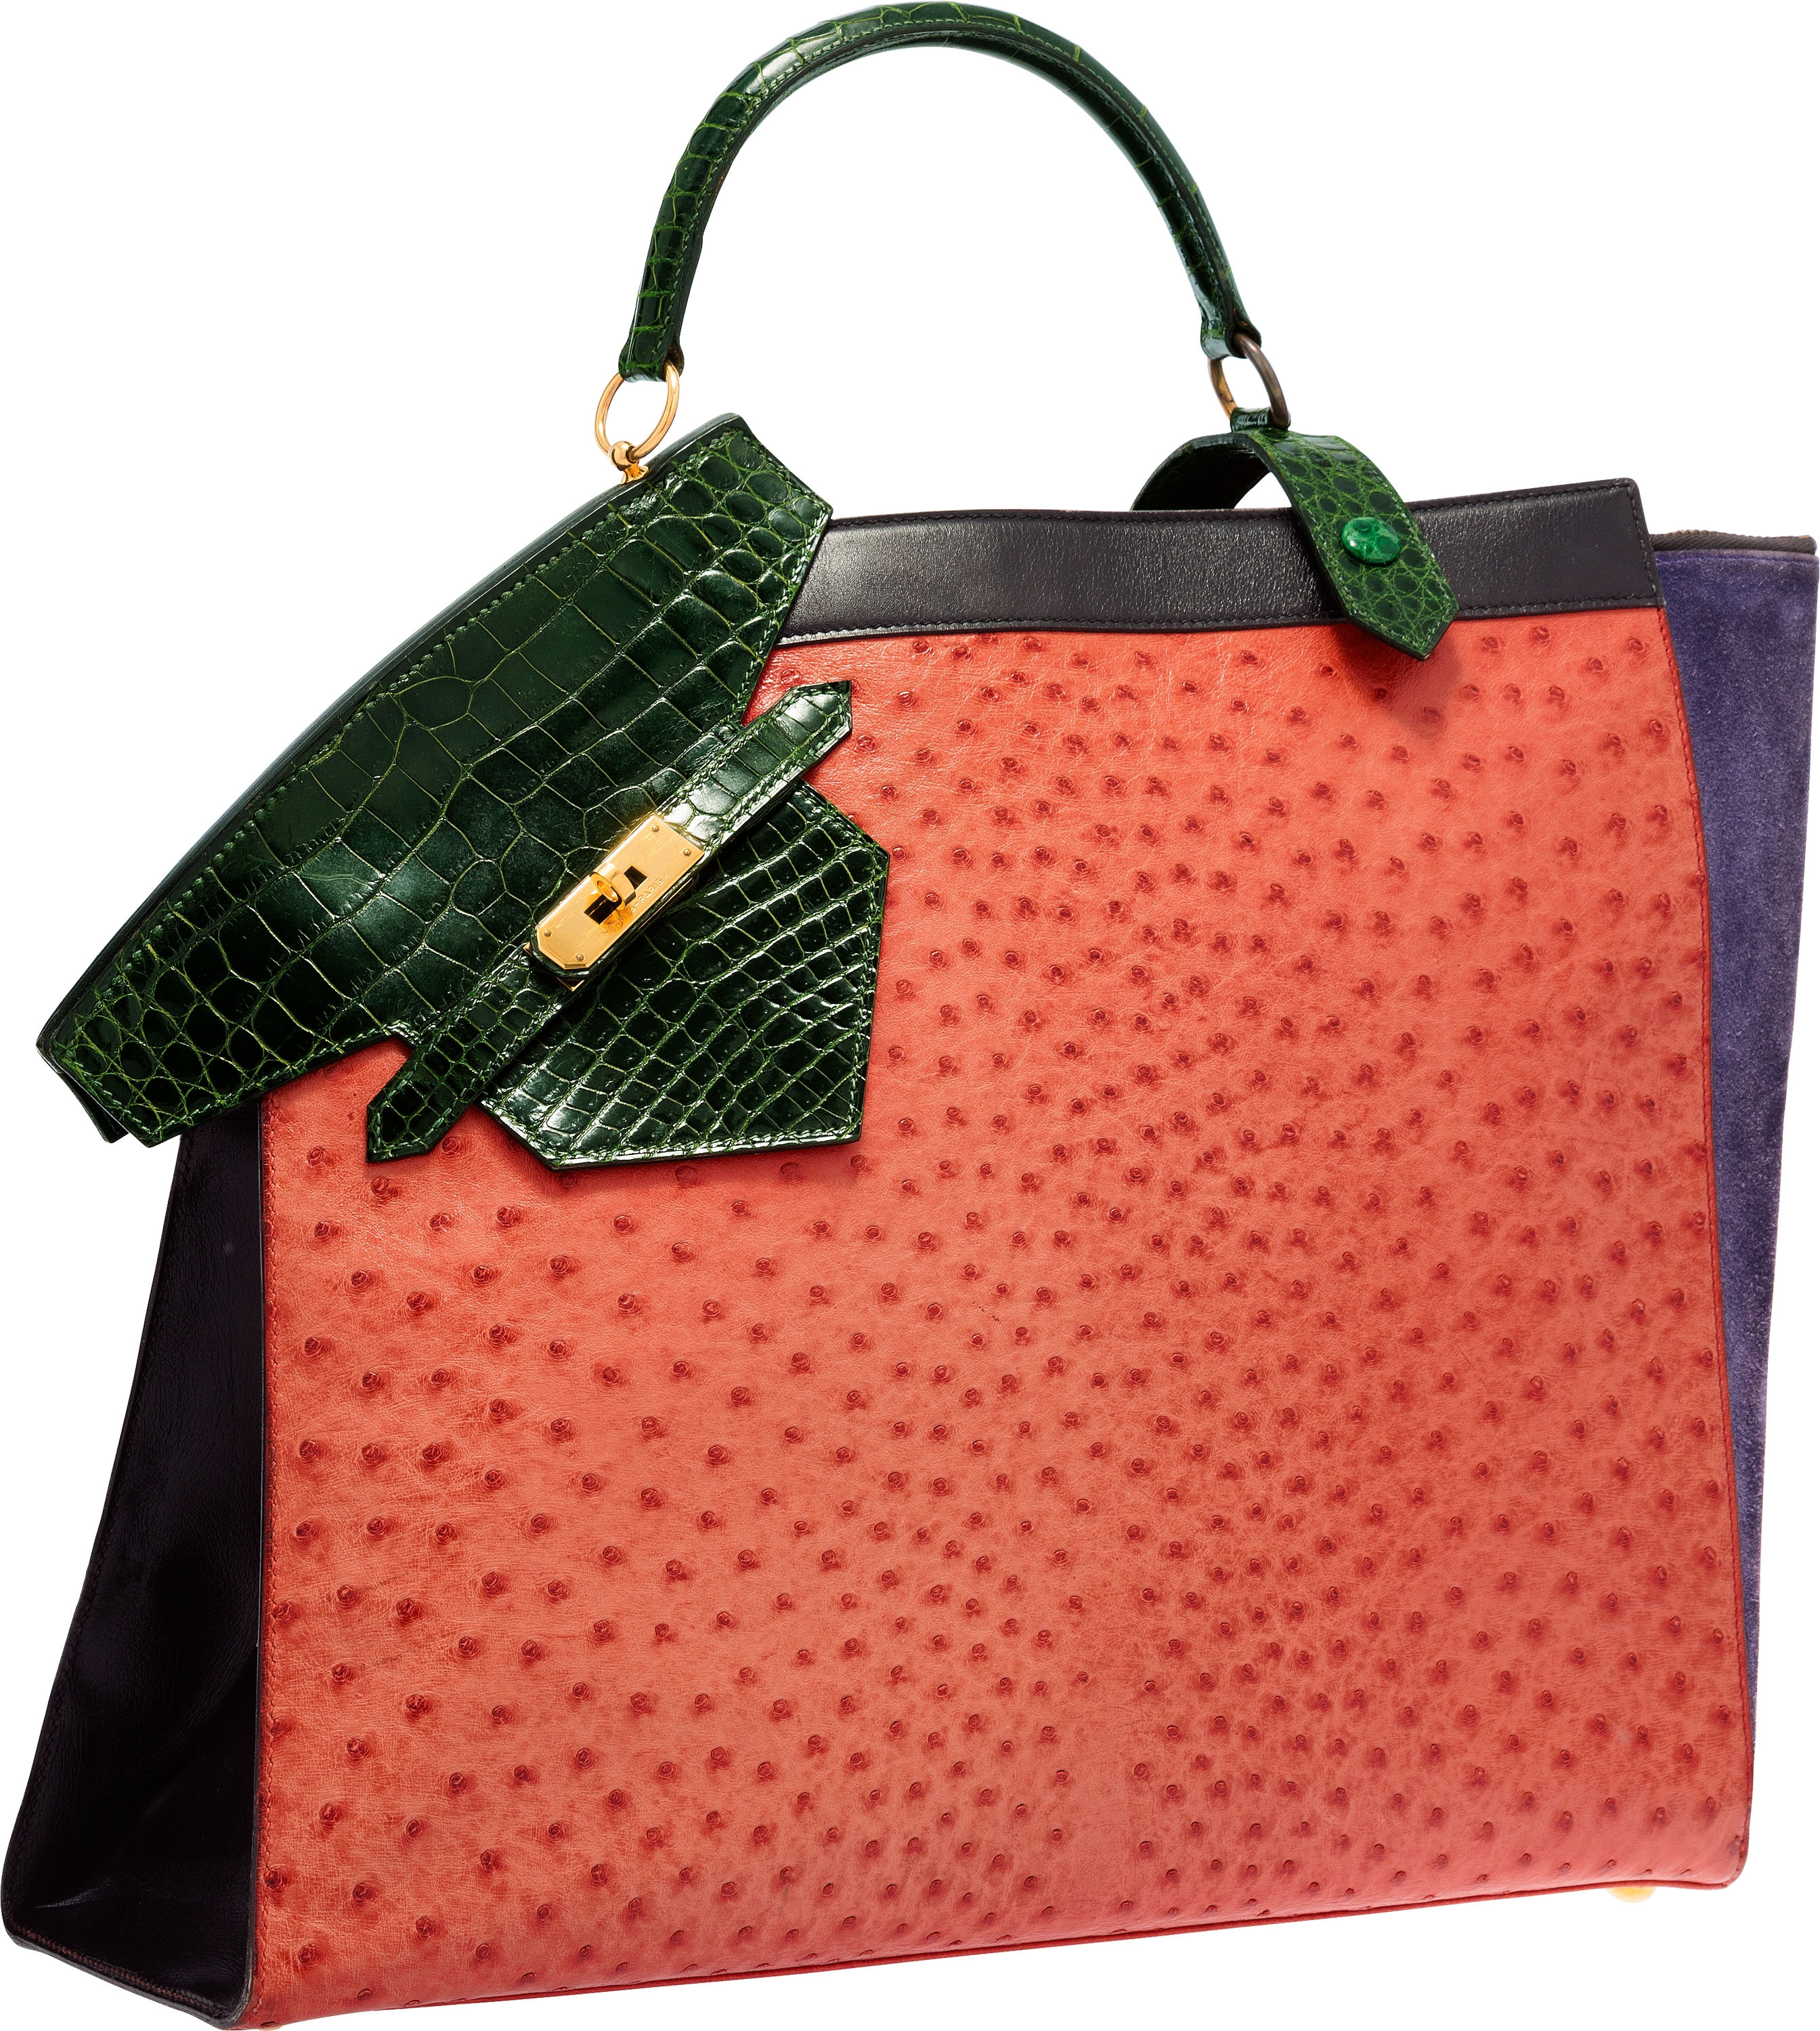 Evolution of the Hermès Mini Kelly Bag, Handbags and Accessories